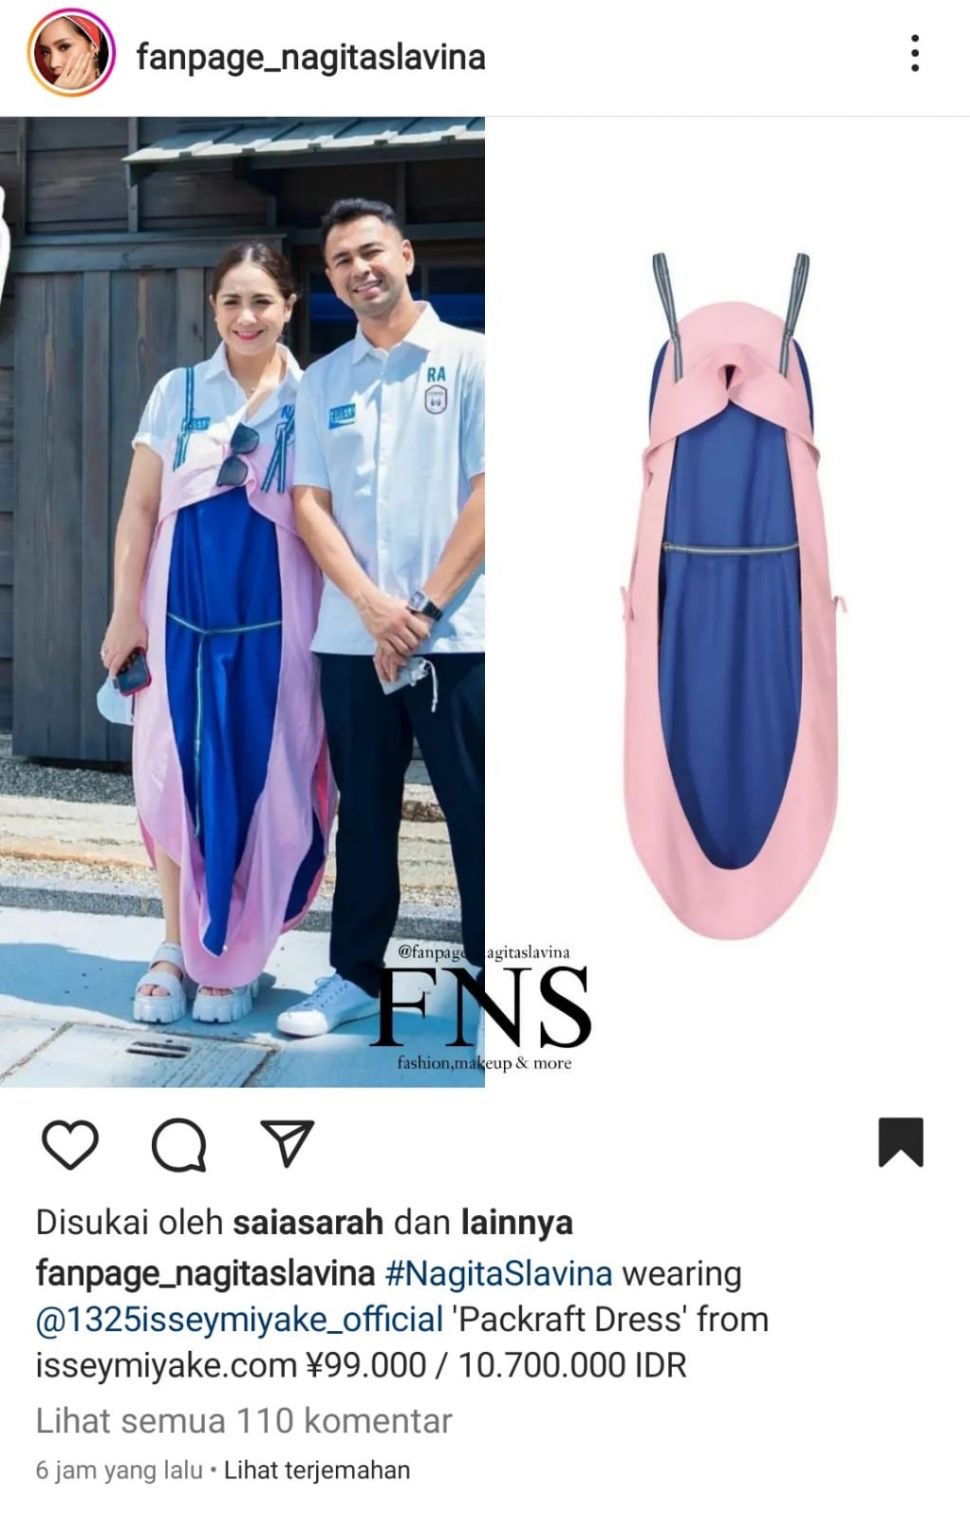 Outfit unik Nagita Slavina (Instagram @fanpage_nagitaslavina)